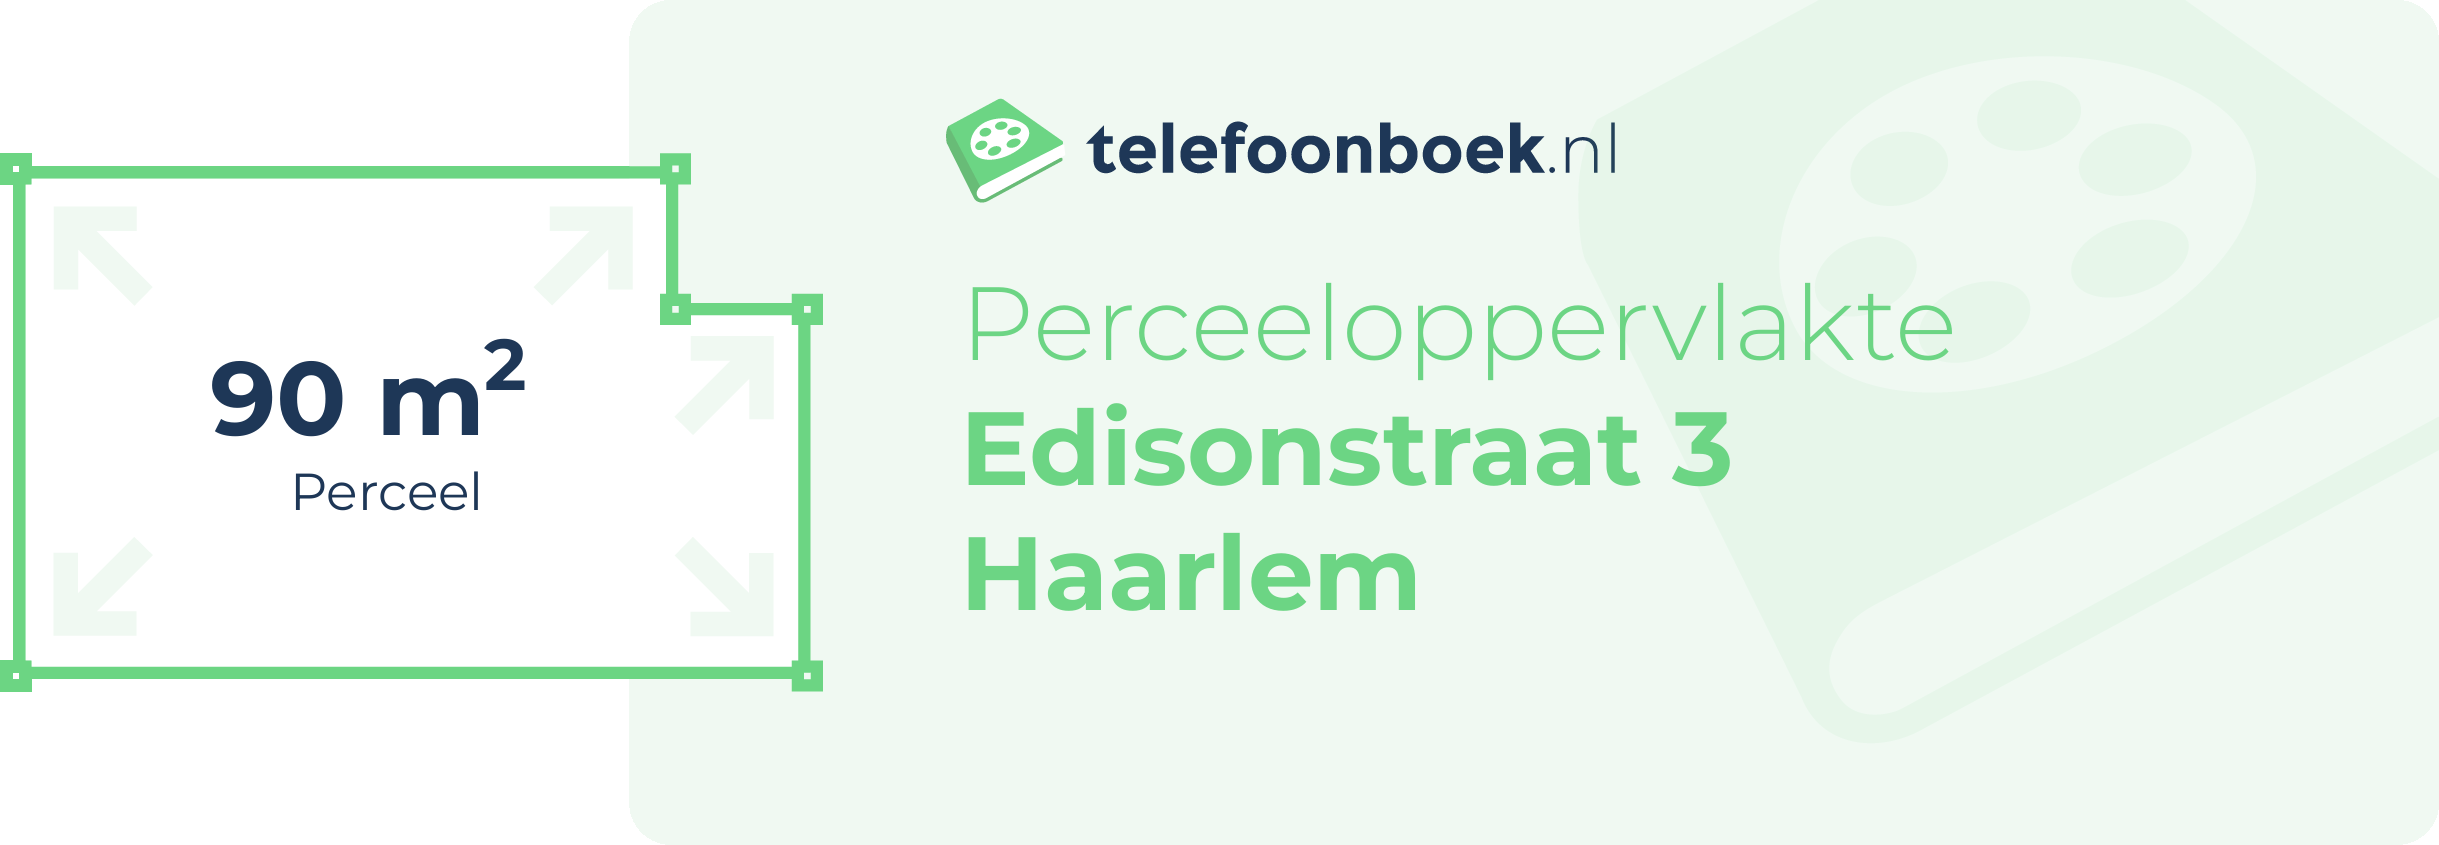 Perceeloppervlakte Edisonstraat 3 Haarlem